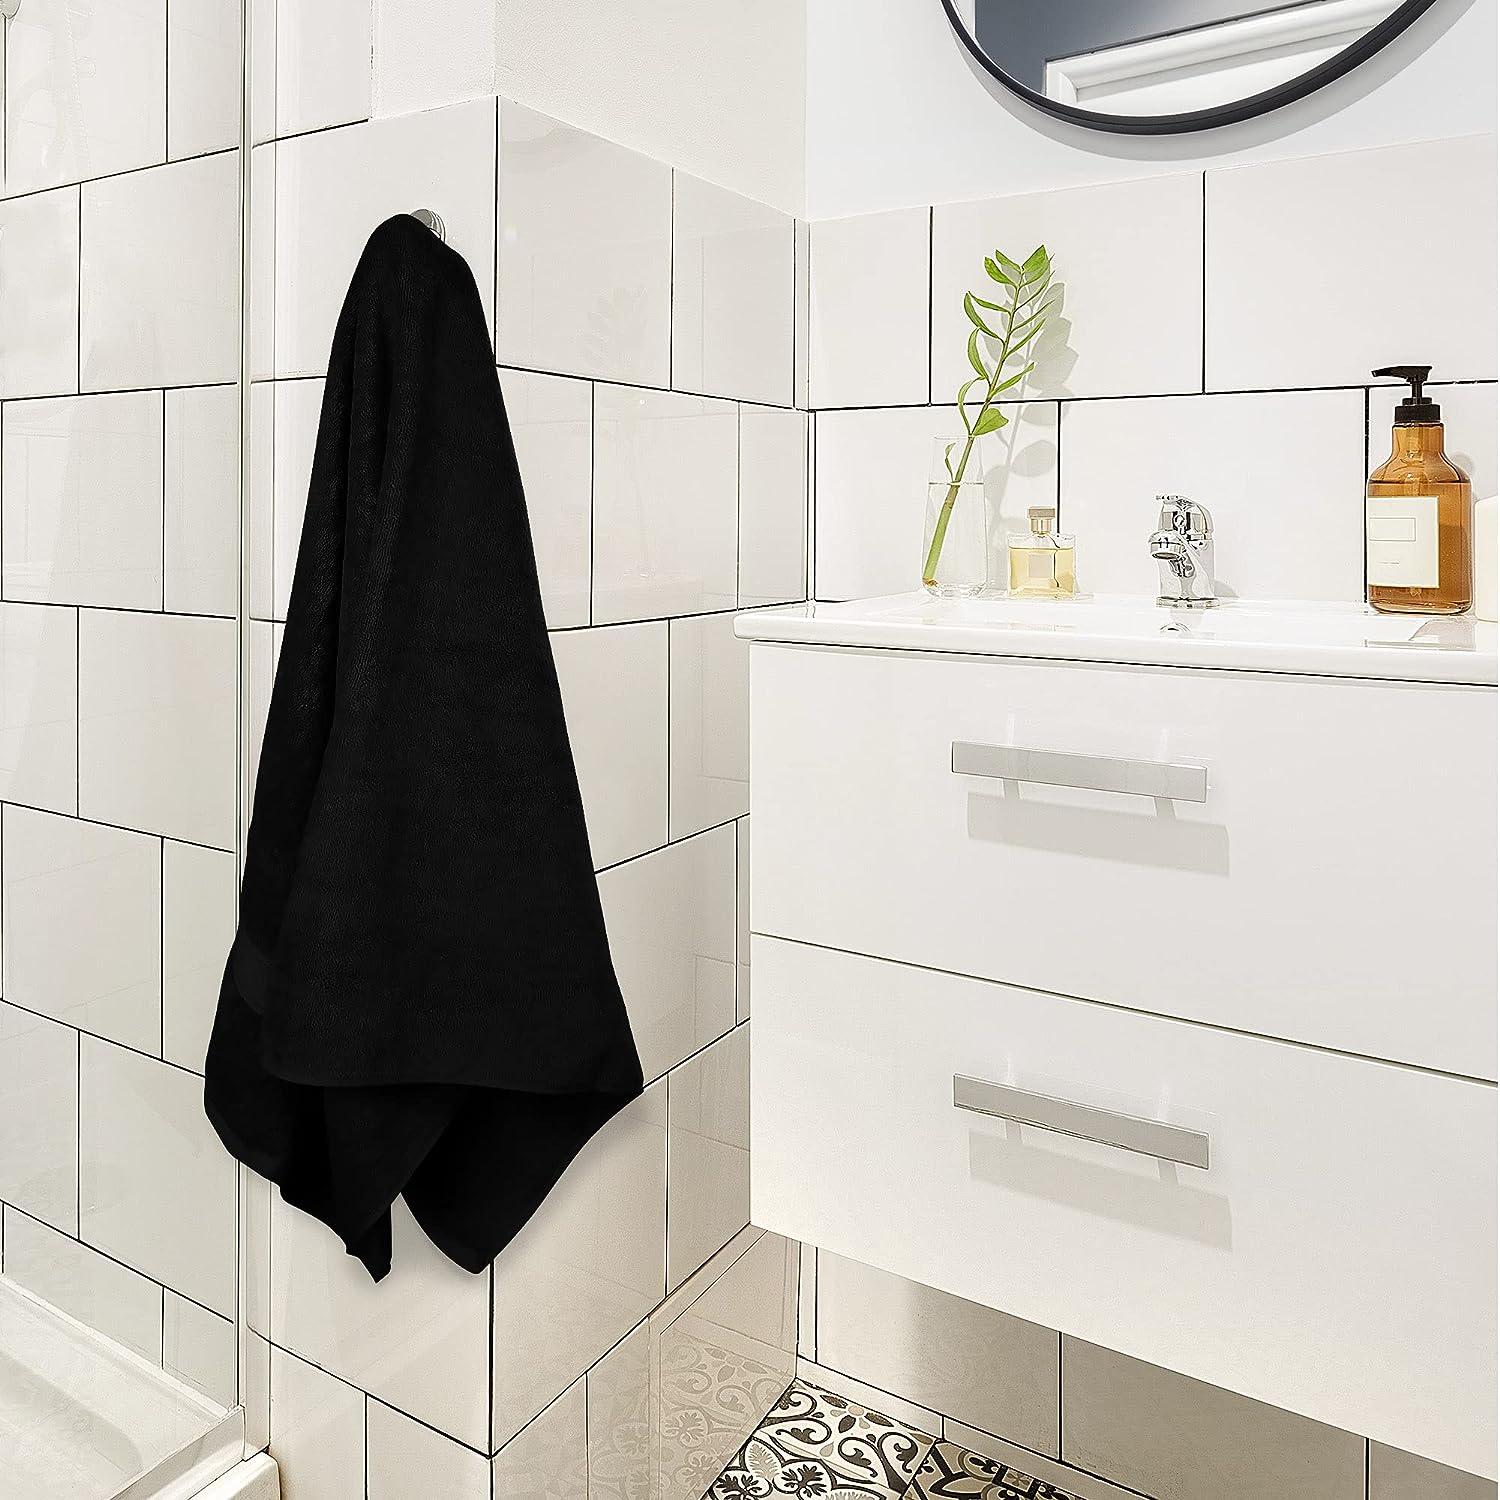 Utopia Towels 4 Pack Premium Bath Towels Set, (27 x 54 Inches) 100% Ring  Spun